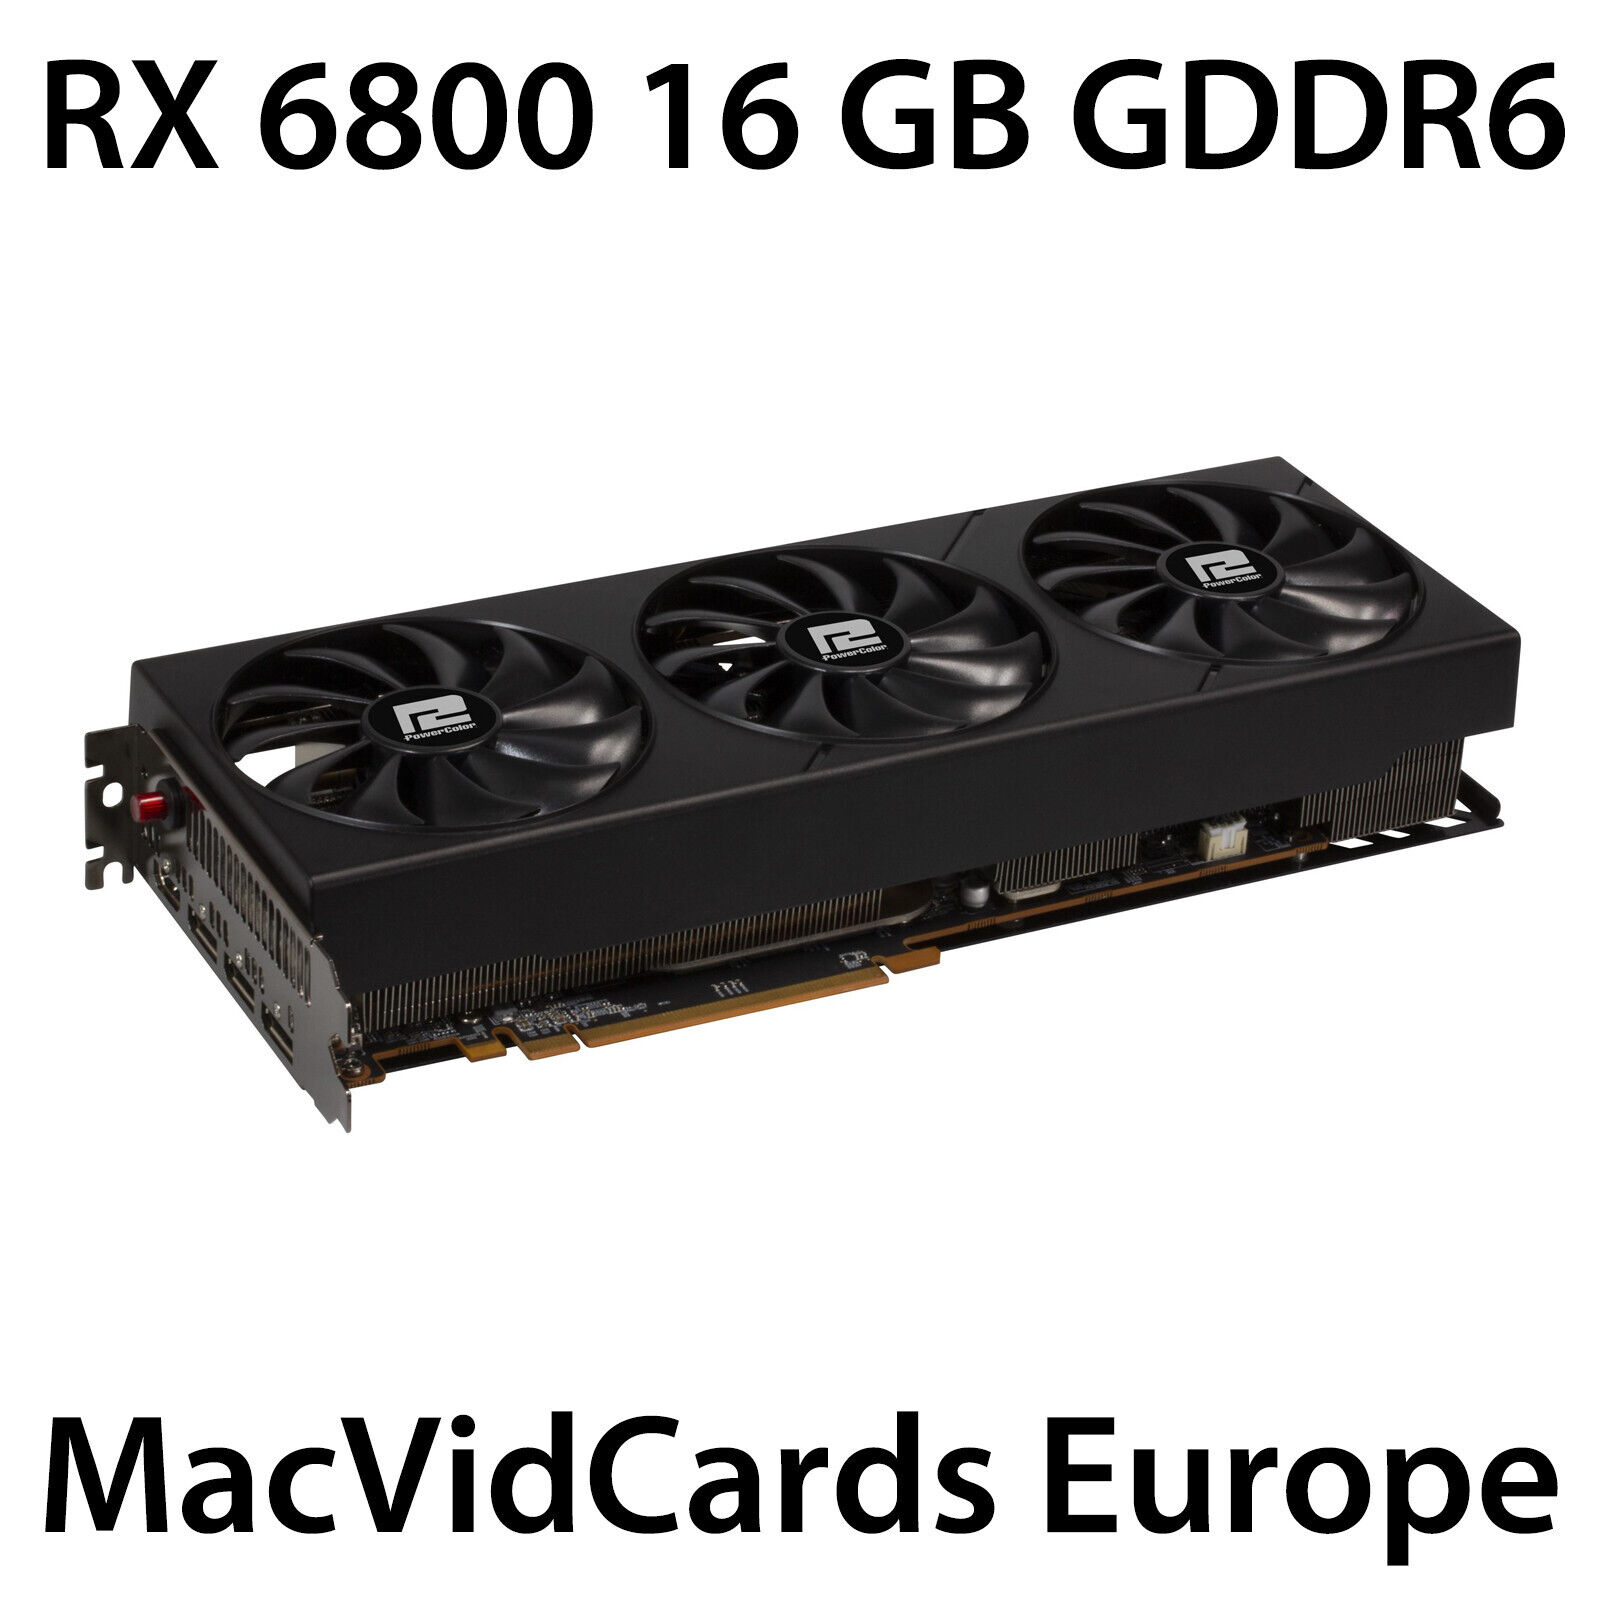 MacVidCards AMD Radeon RX 6800 16 GB GDDR6 for Apple Mac Pro 5,1 EFI BOOT SCREEN